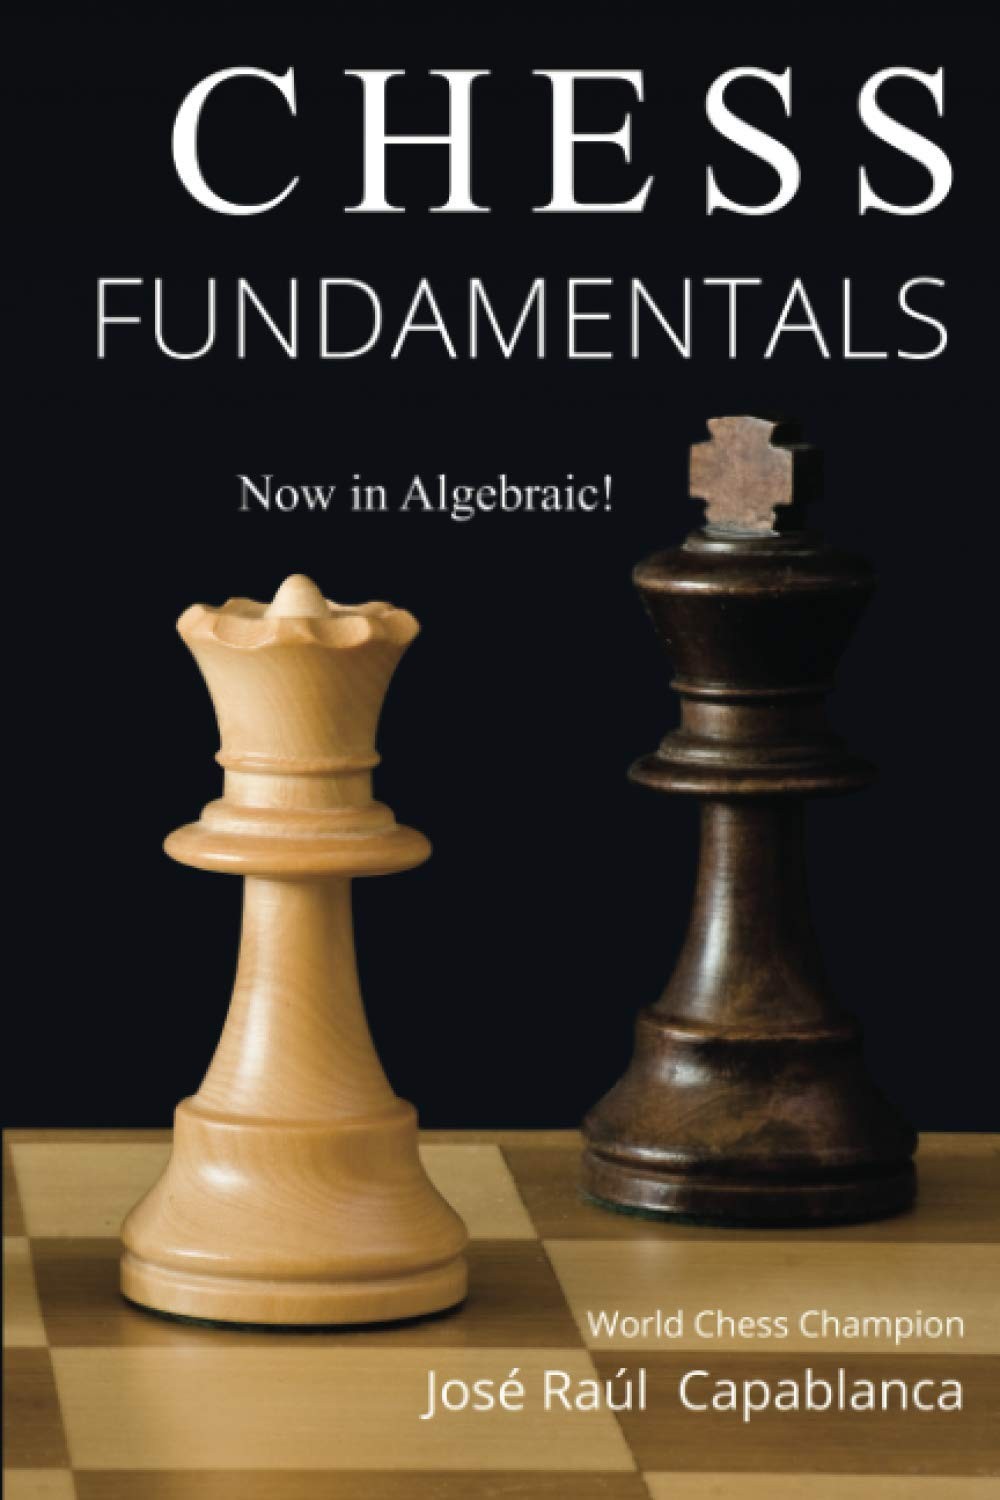 Chess Fundamentals by Jose Raul Capablanca 